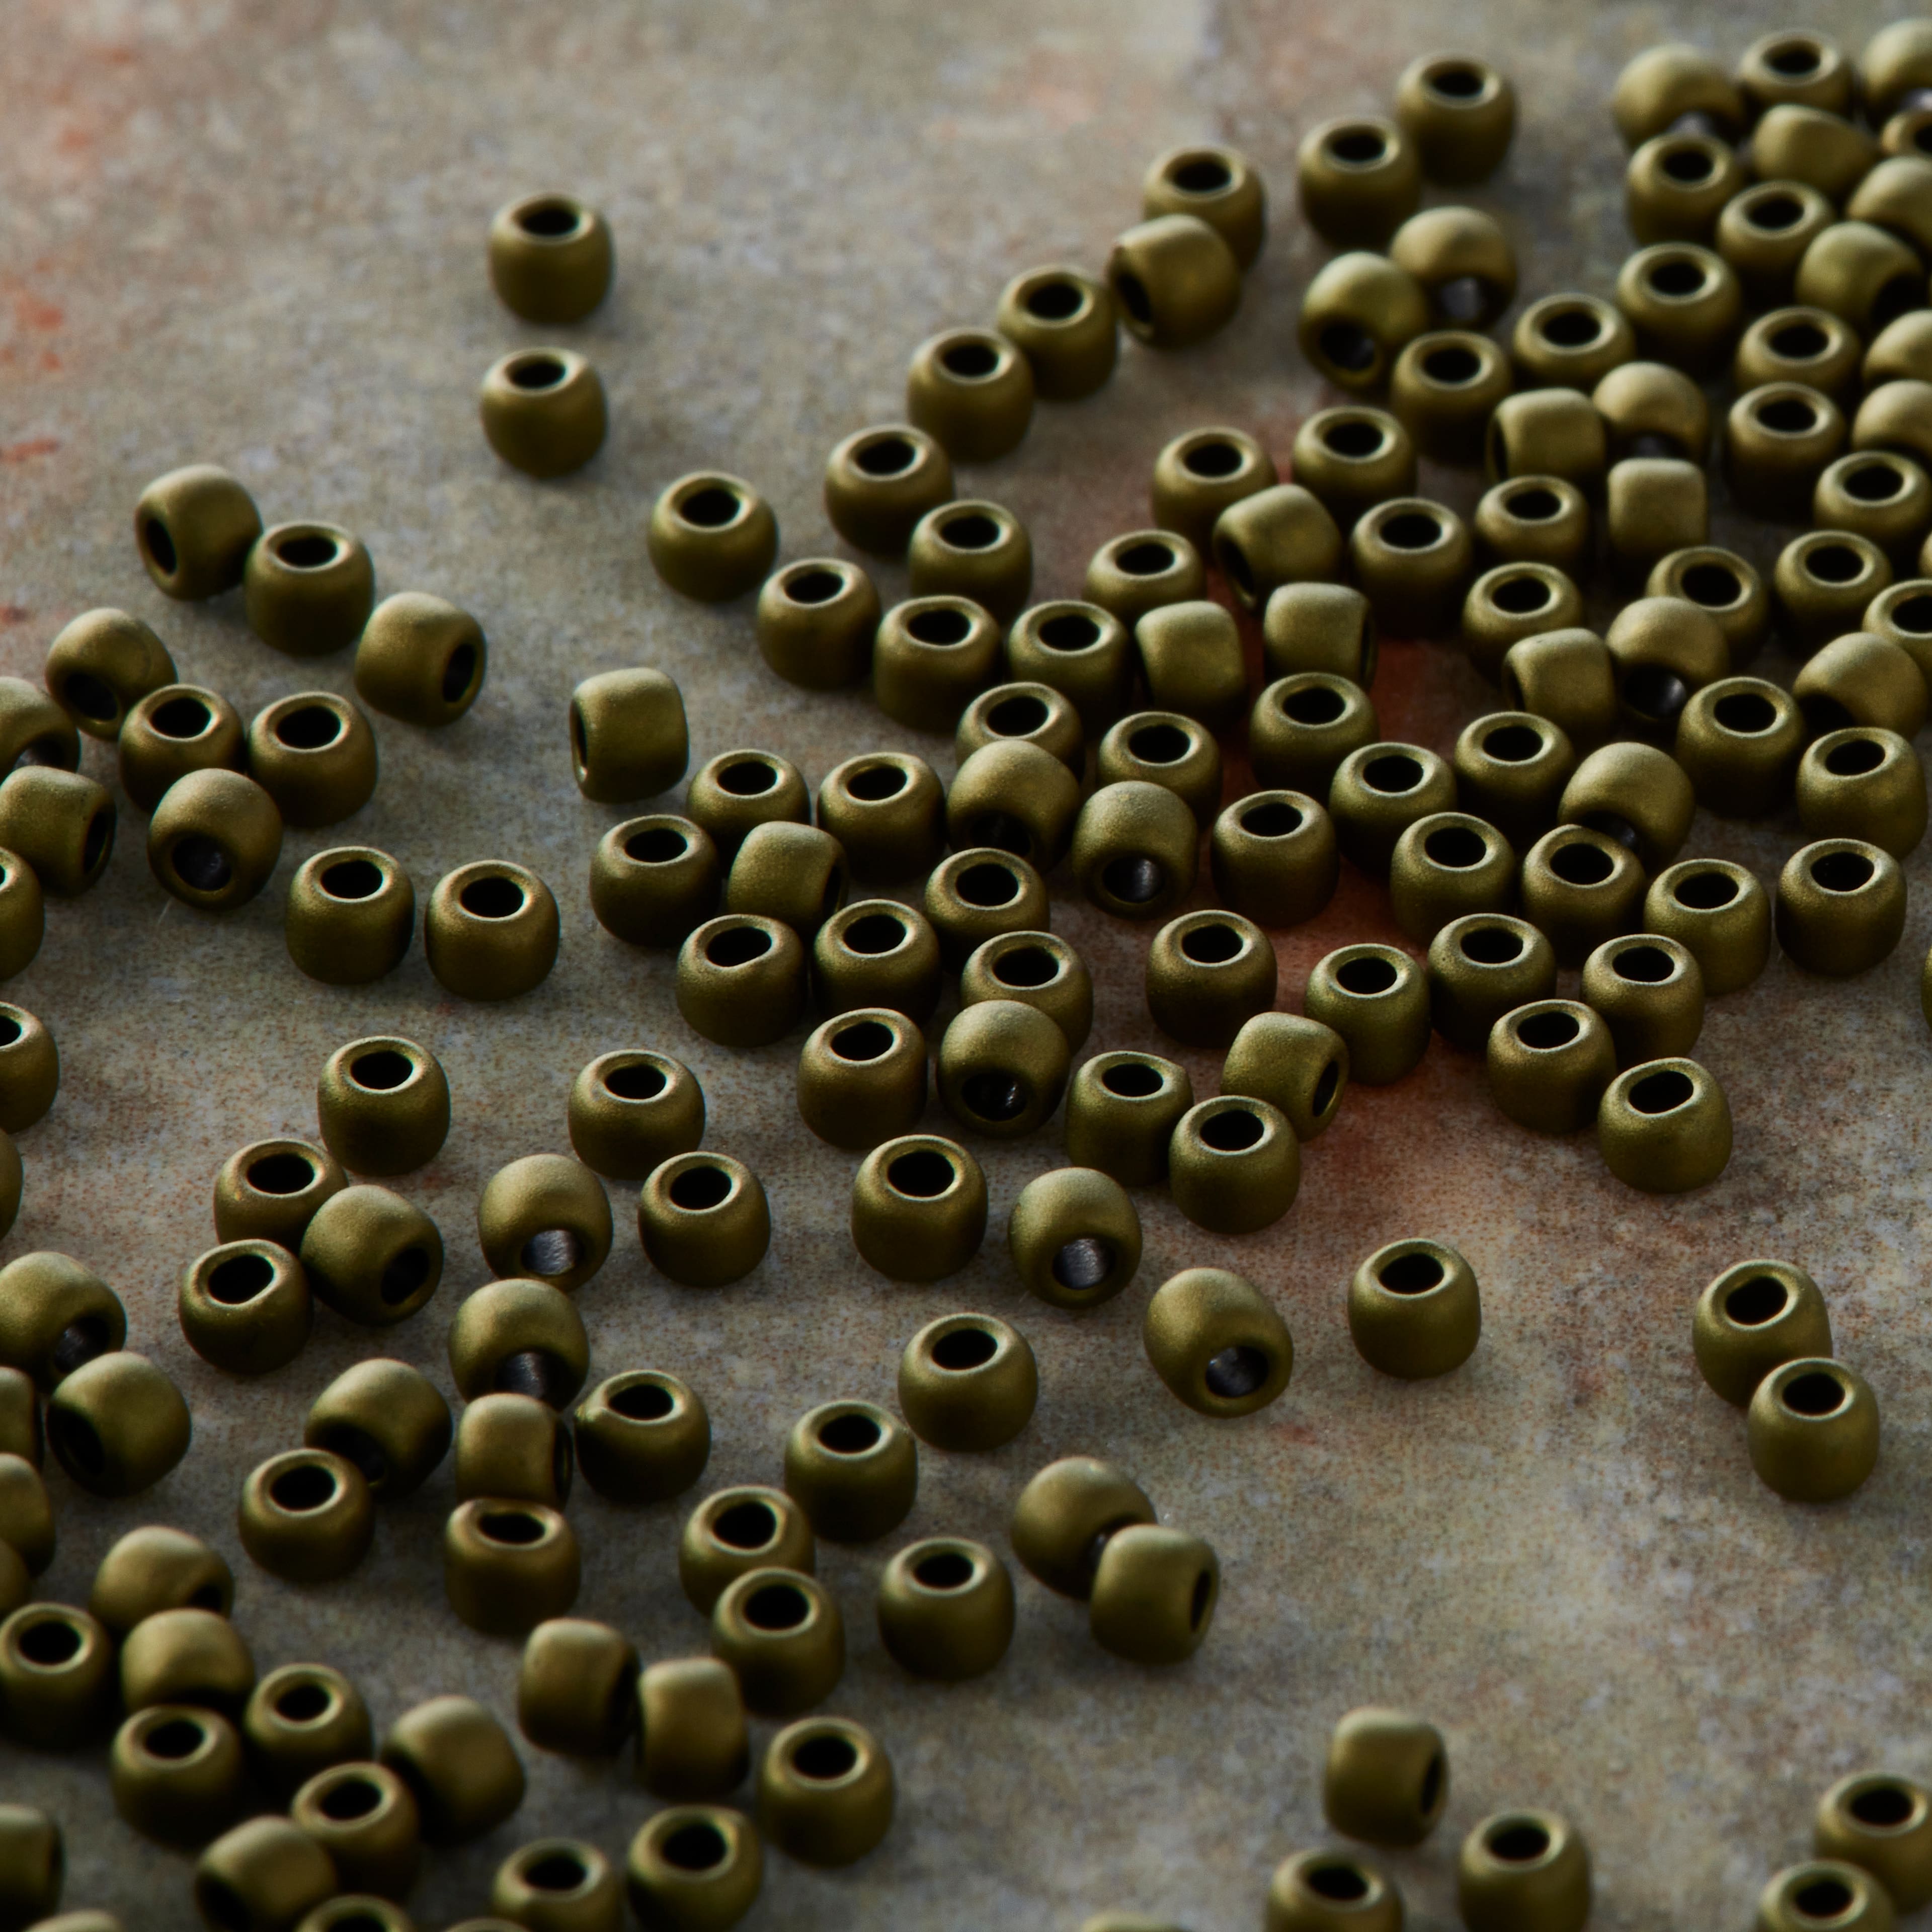 Toho&#xAE; Matte Japanese Glass Seed Beads, 11/0